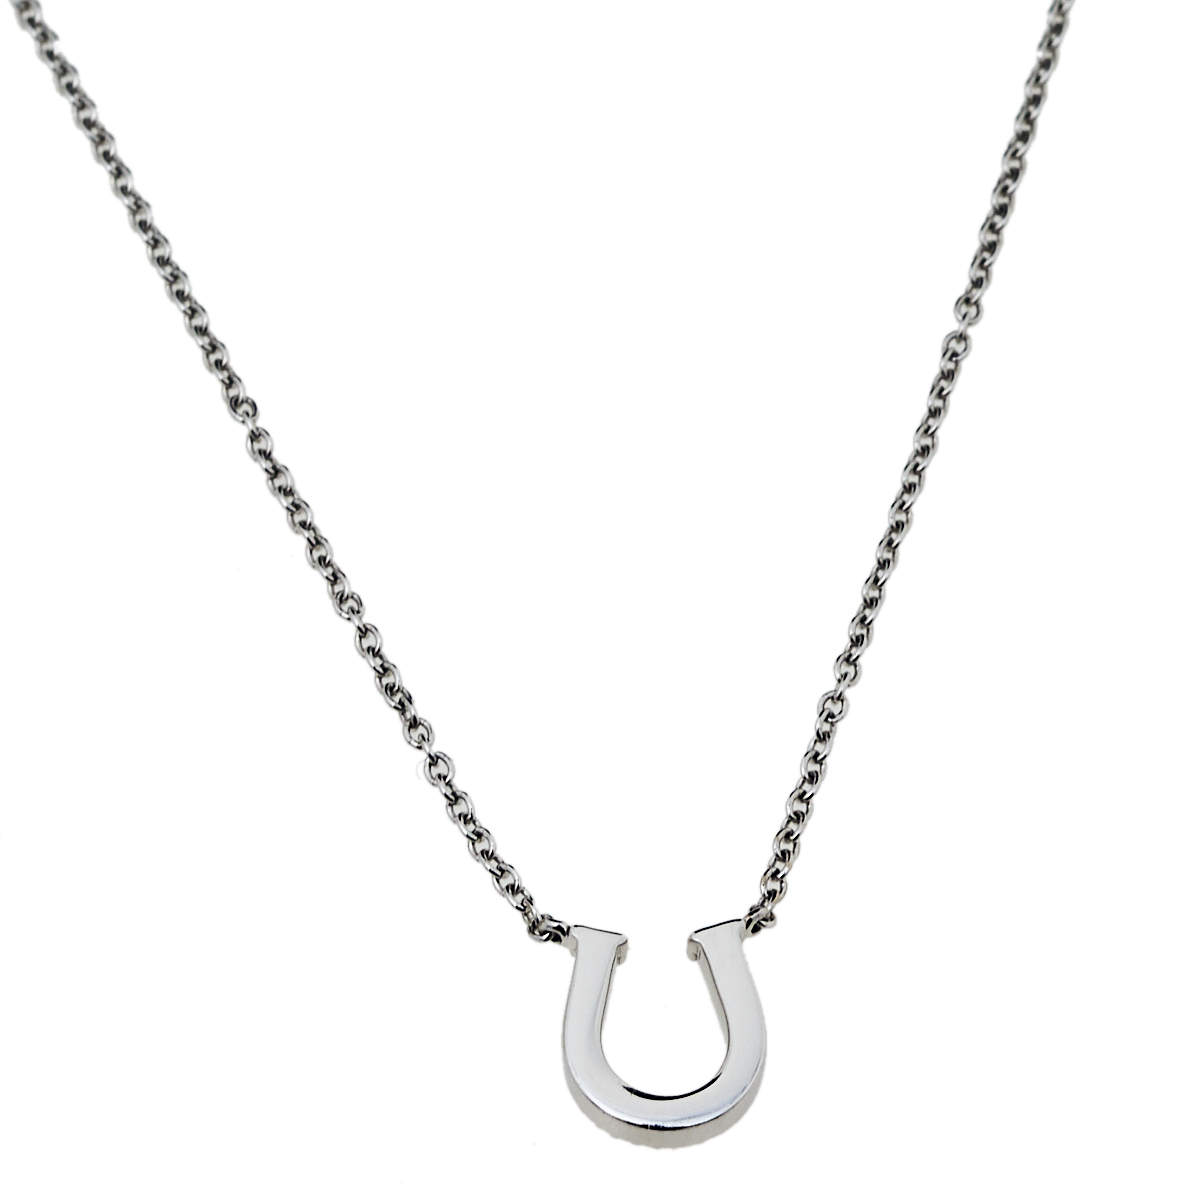 Tiffany & Co Horseshoe necklace Pendant Sterling Silver 16 inch | eBay